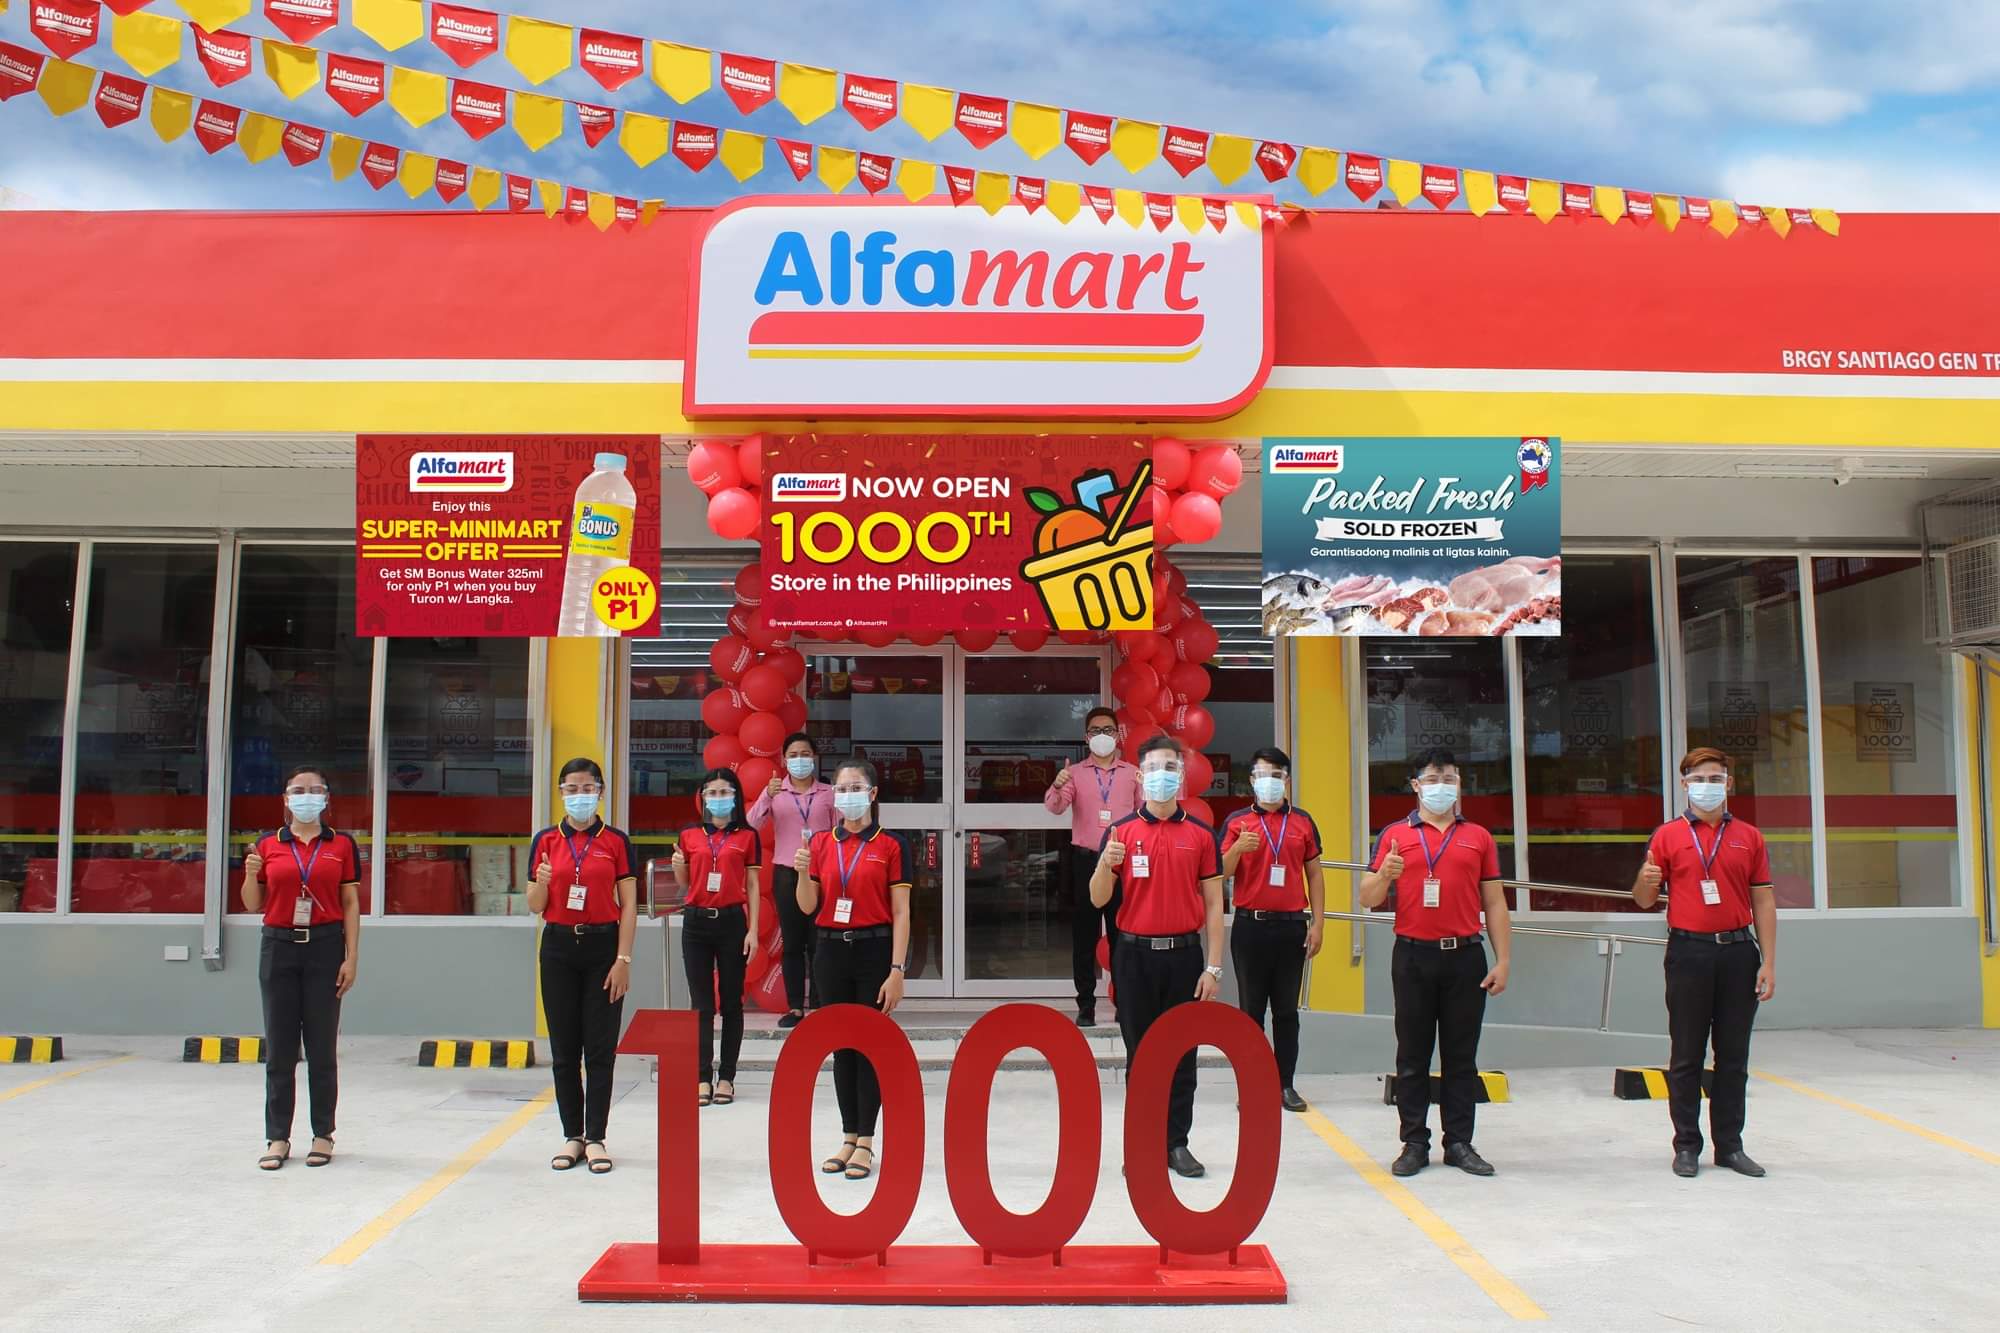 Alfamart's 1000th Store! 